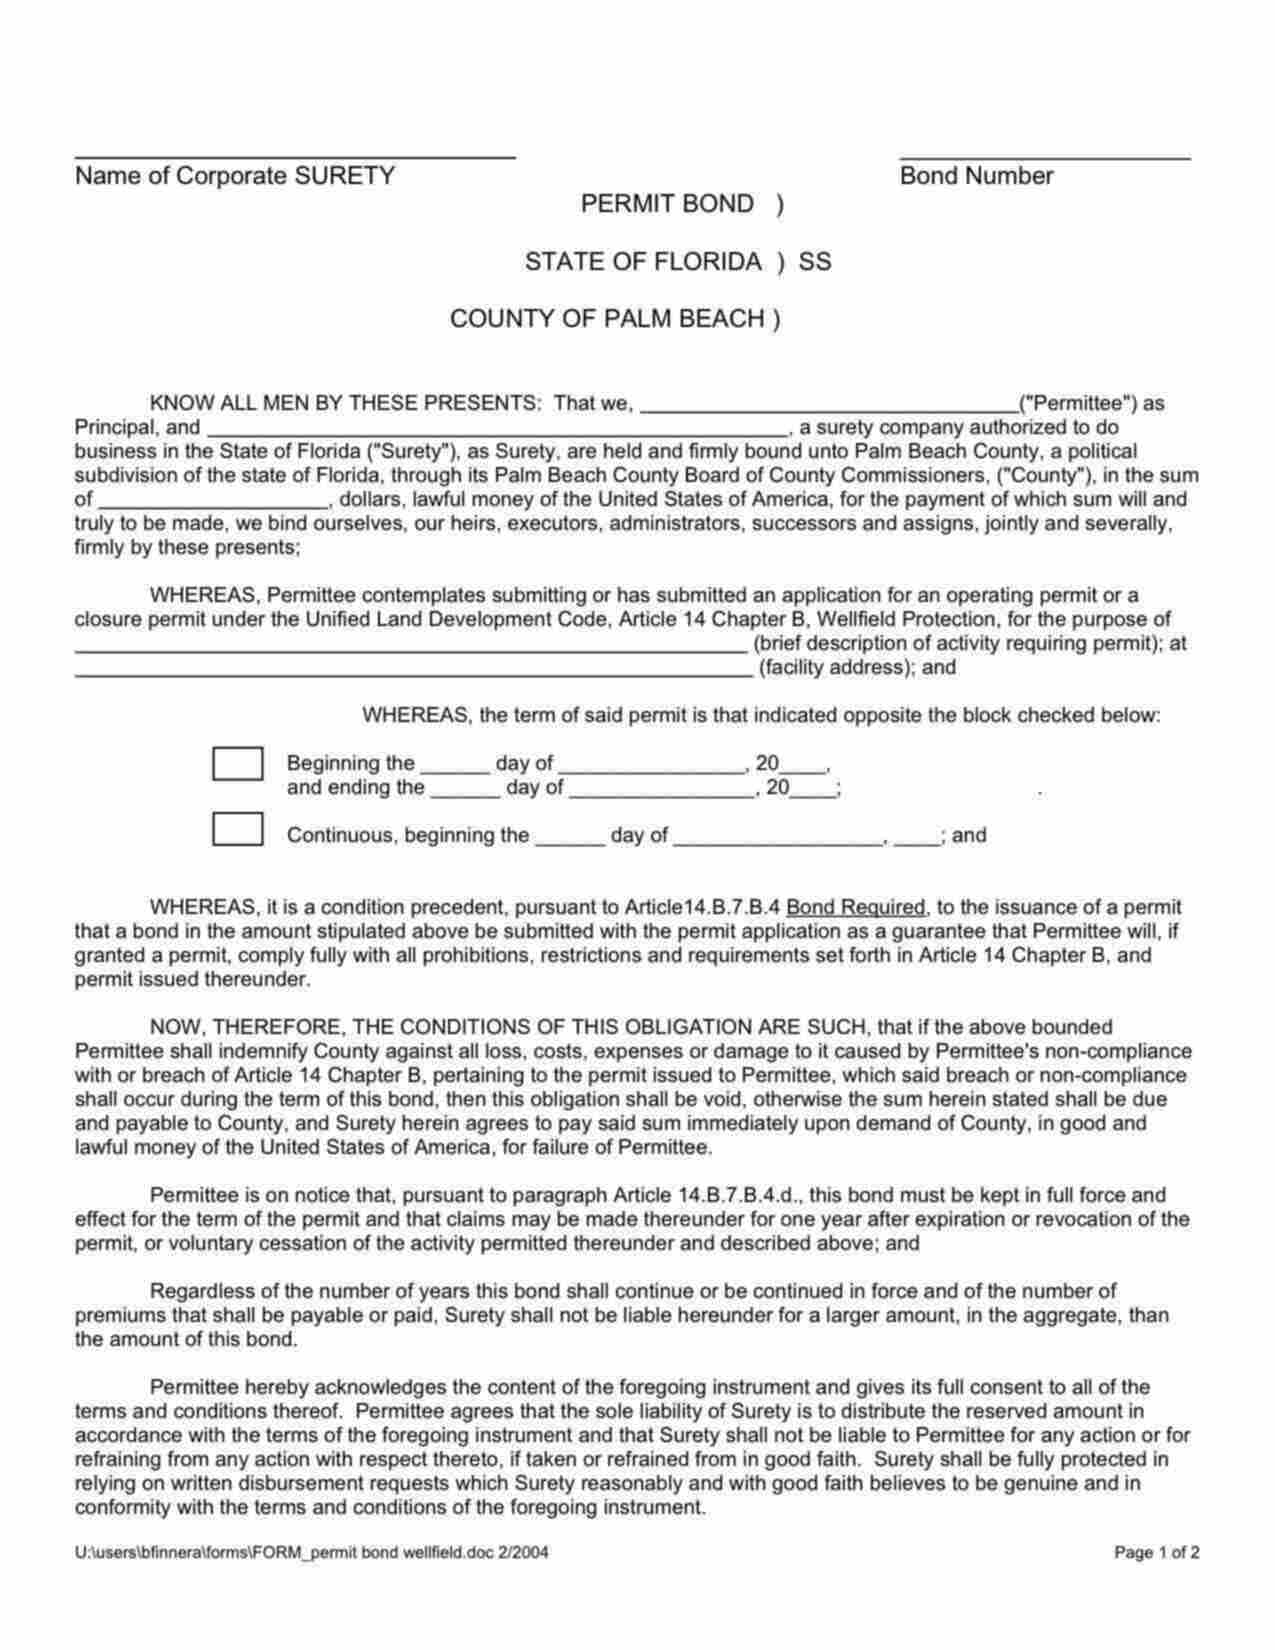 Florida Wellfield Protection Permit Bond Form